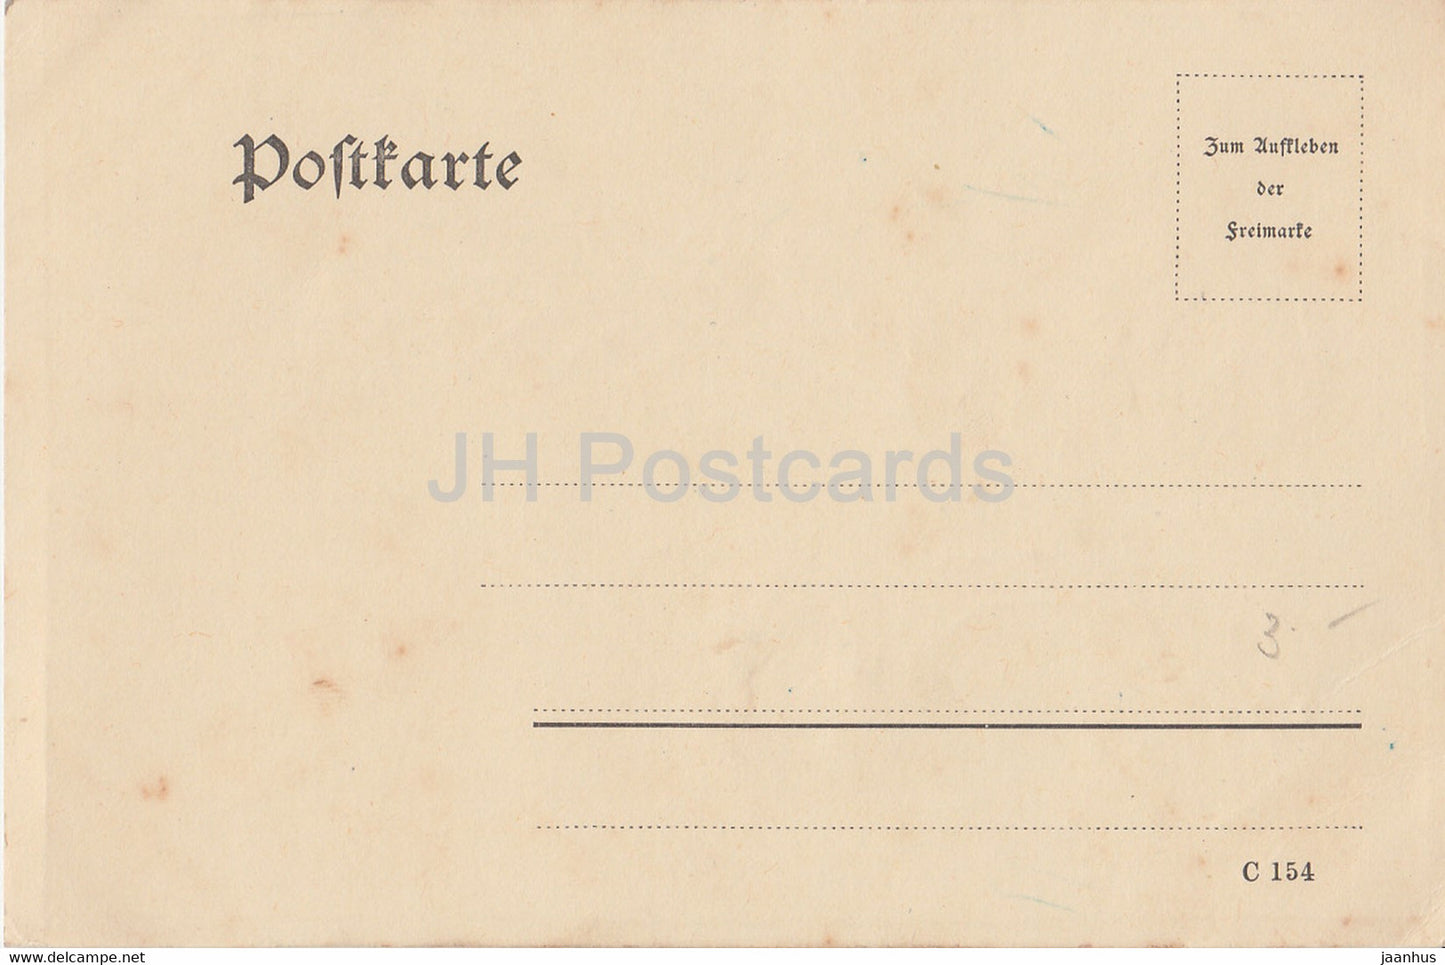 Greeting Card - C 154 - flowers - old postcard - Germany - unused